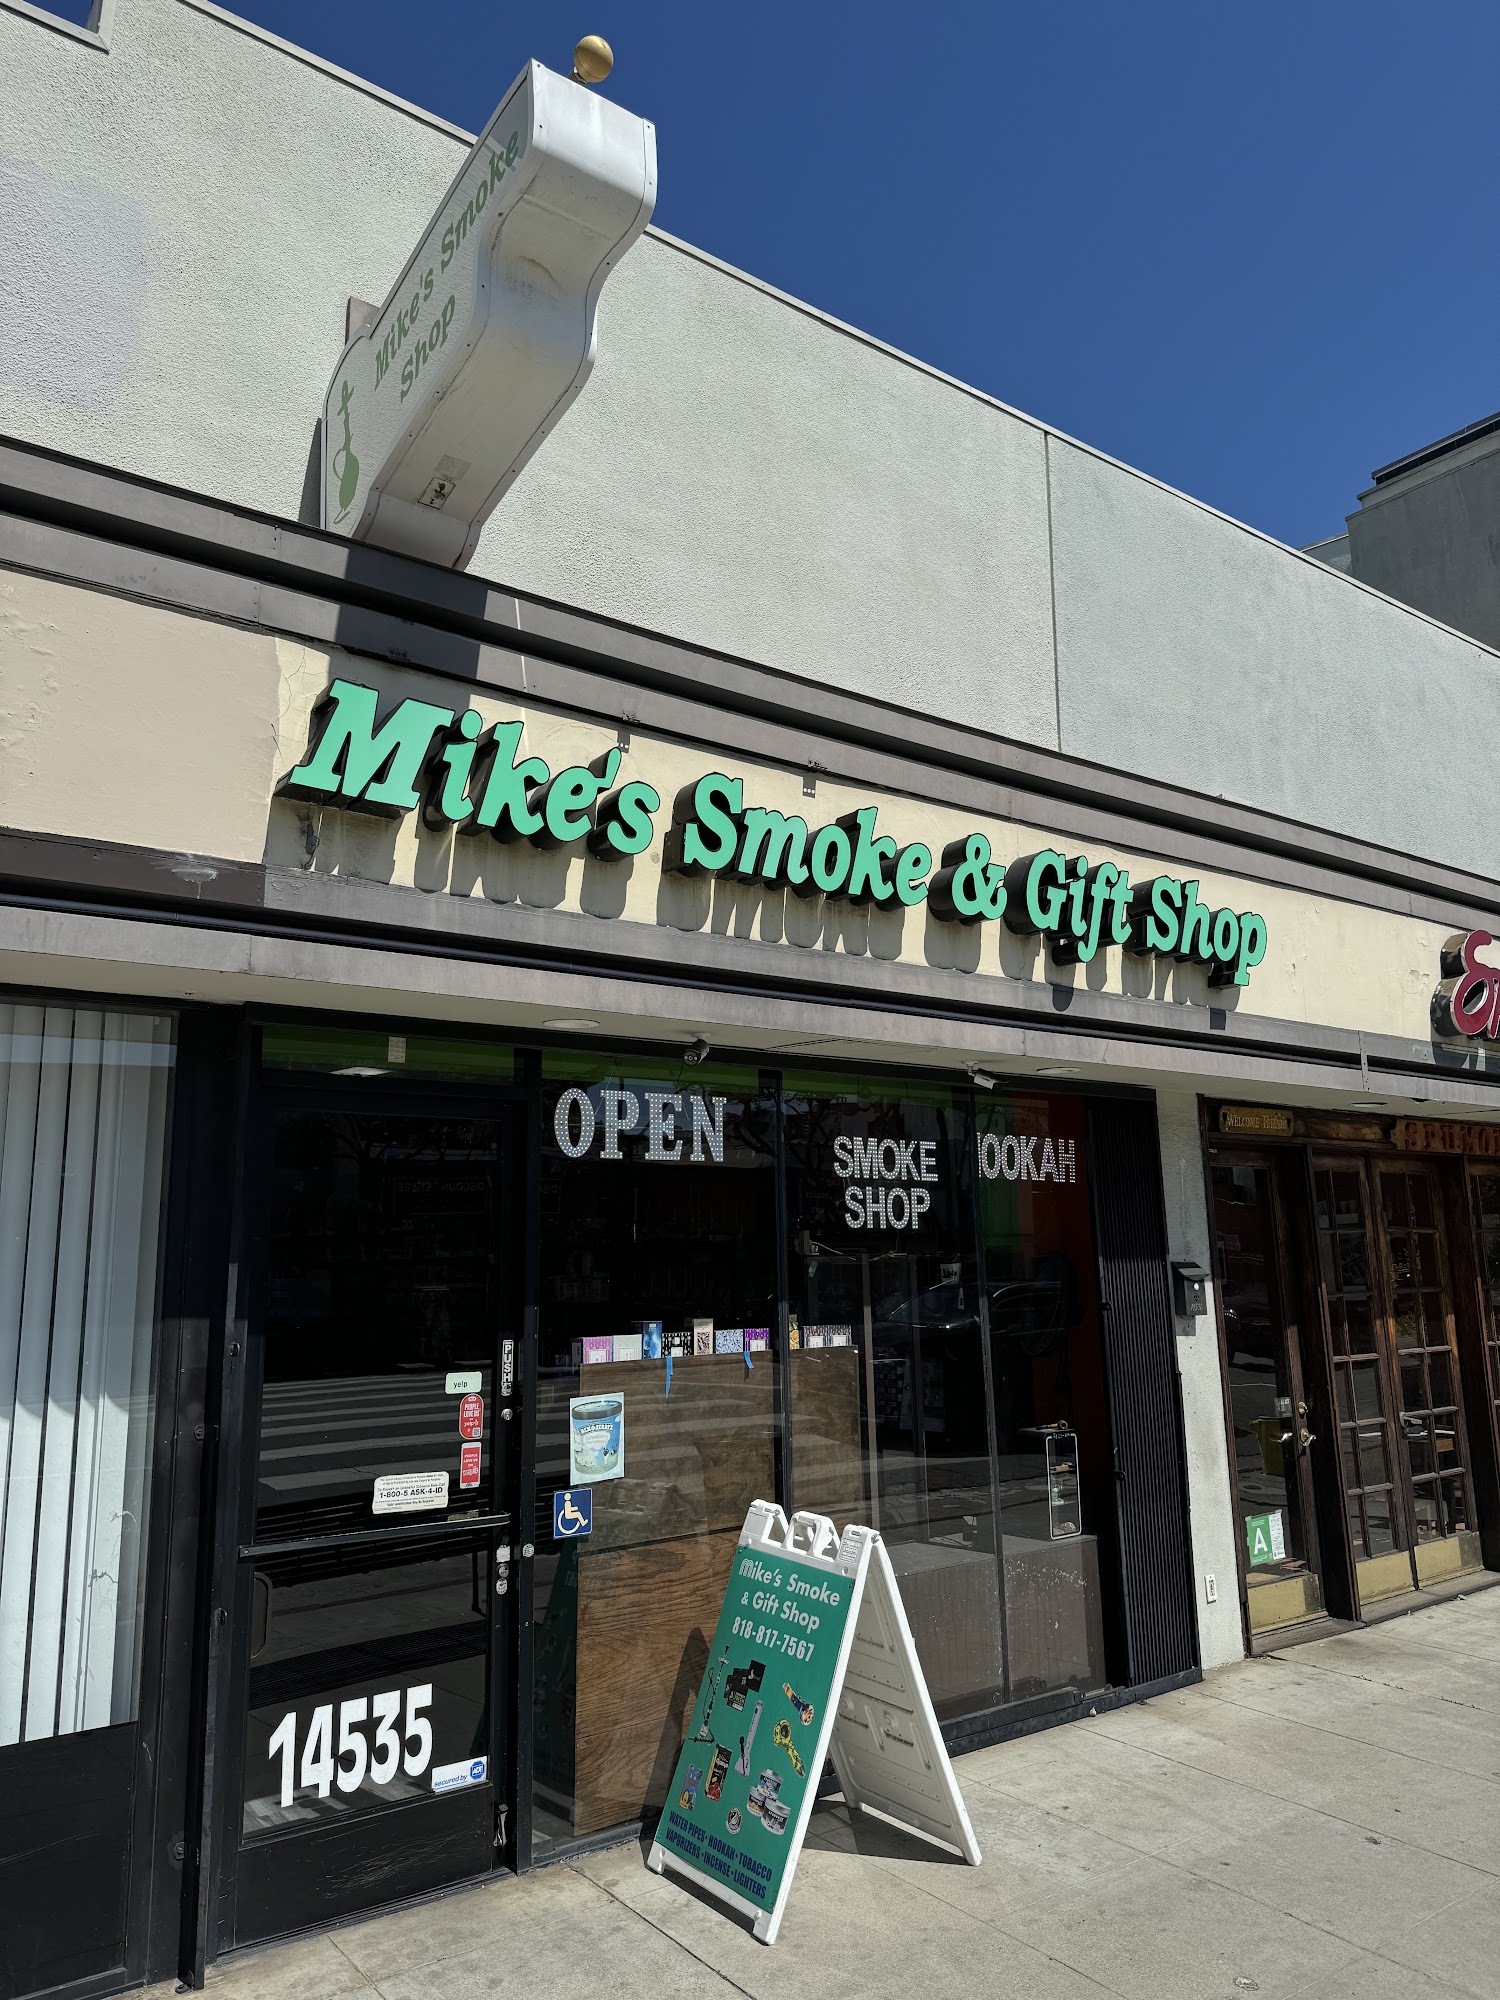 Mike's Smoke & Gift Shop